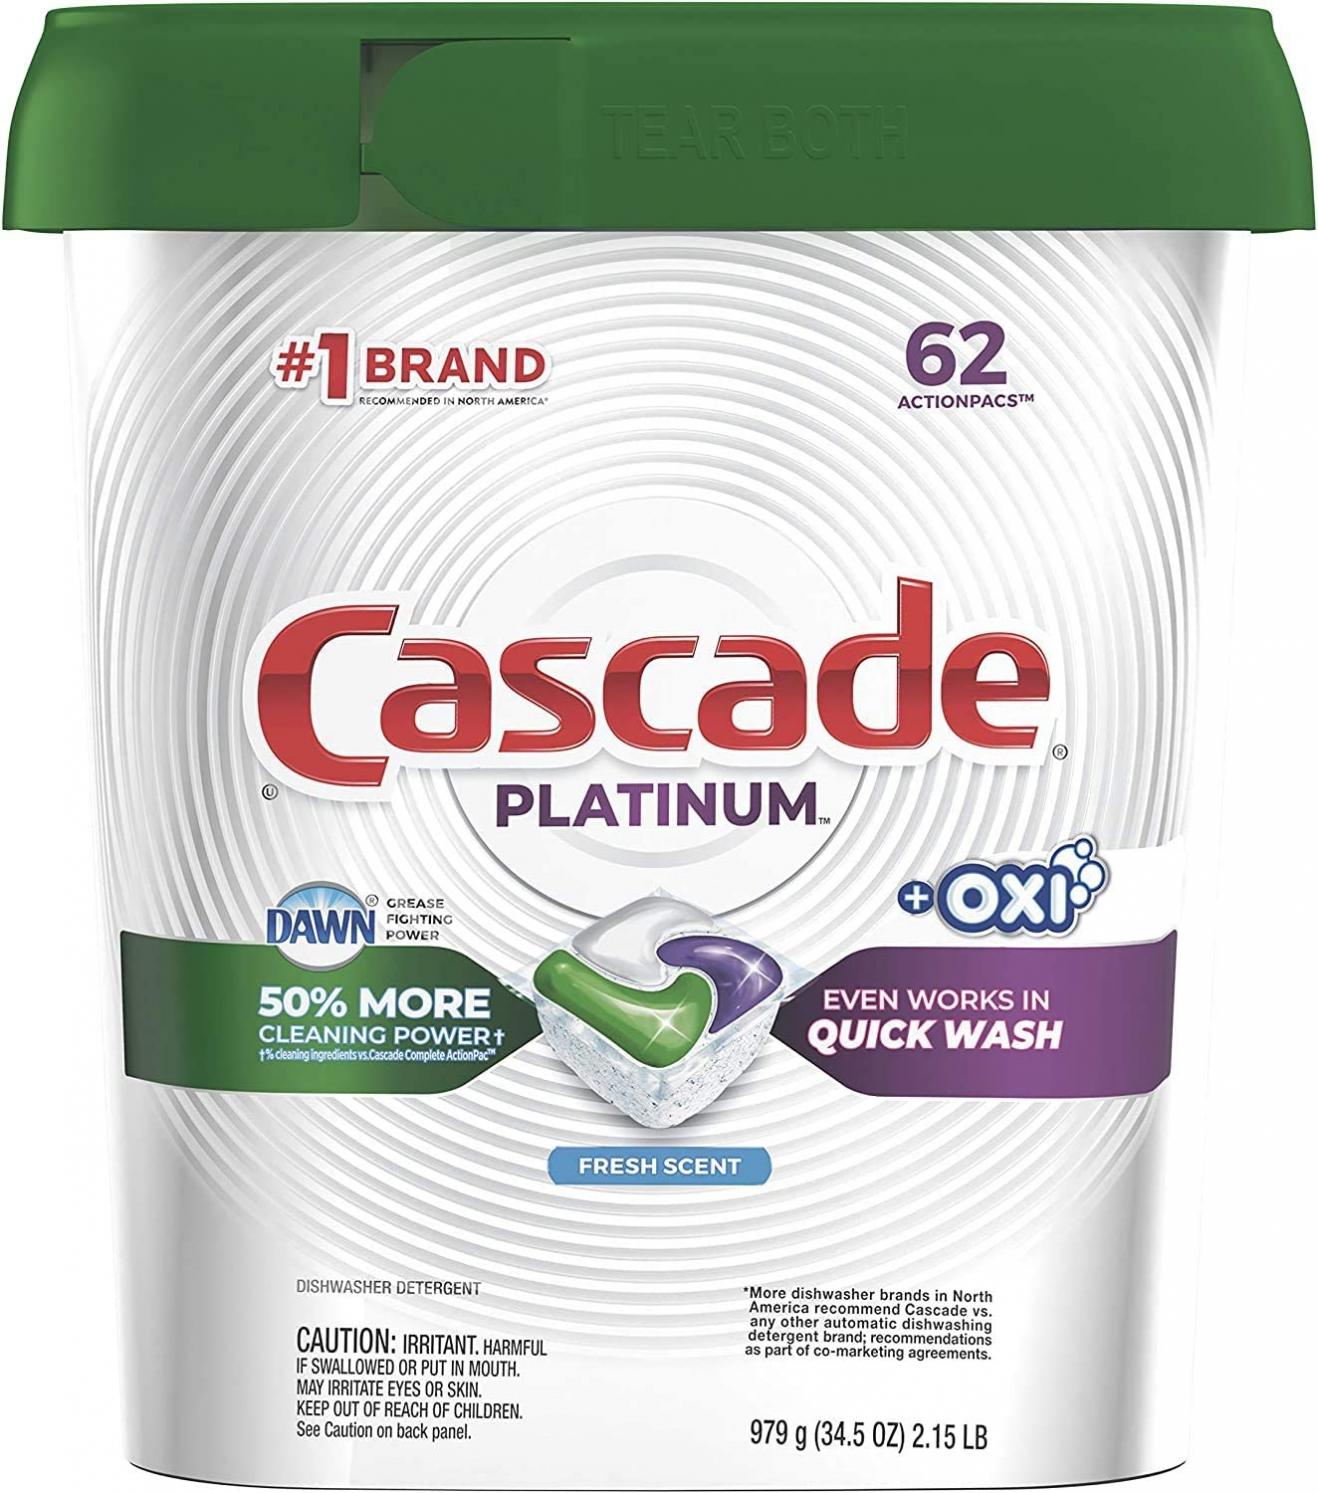 Cascade Platinum Dishwasher Pods, Actionpacs + Oxi Dishwasher Detergent with Dishwasher Cleaner Action, Fresh, 62 Count